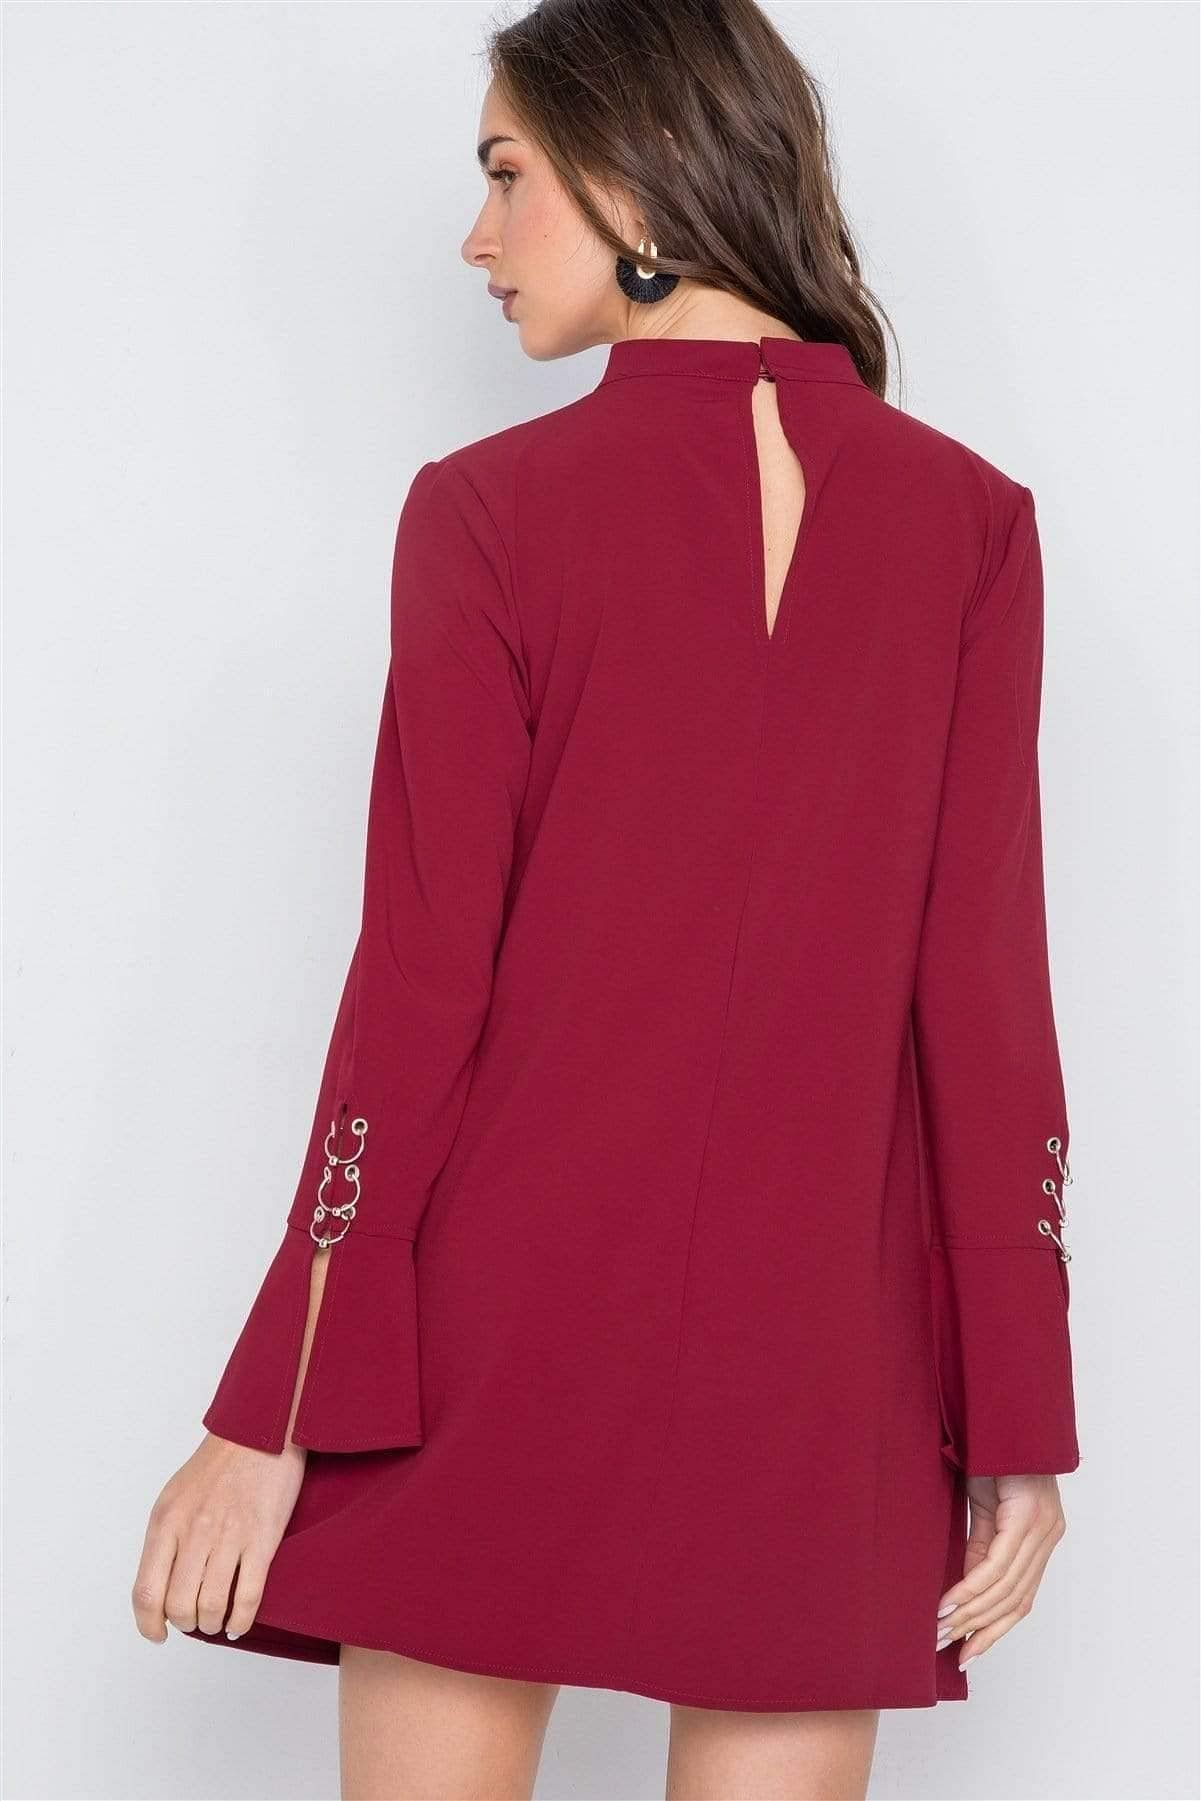 Wine Long Sleeve V-Neck Mini Dress - Shopping Therapy Dress